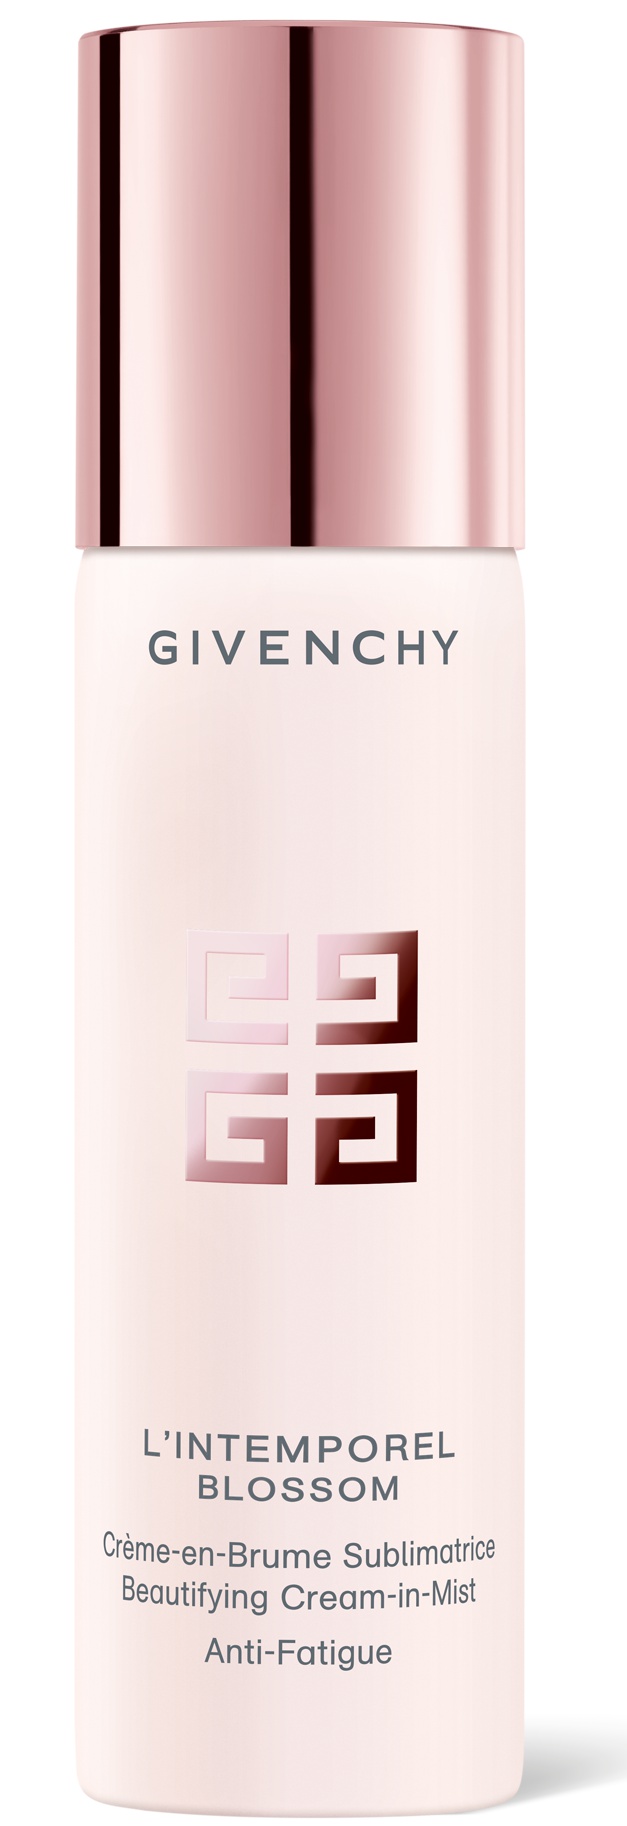 Givenchy L'Intemporel Blossom Beautifying Cream-in-Mist Anti-Fatigue